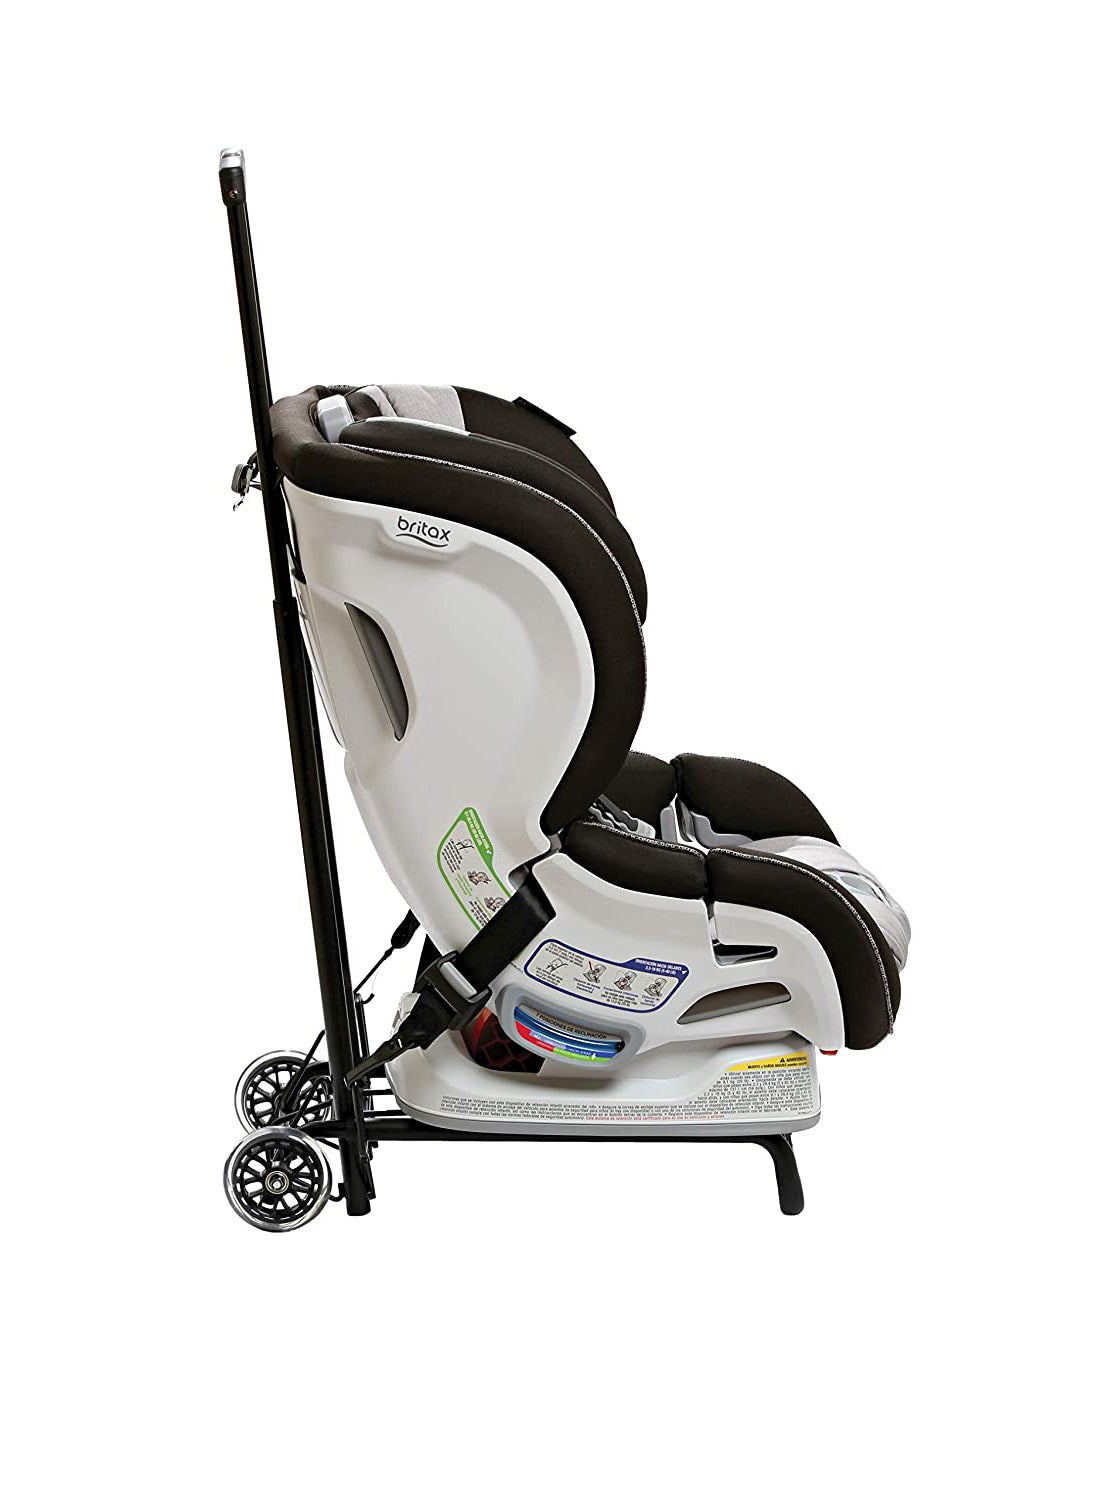 Britax Convertible Car Seat Travel Cart - ANB Baby -$75 - $100